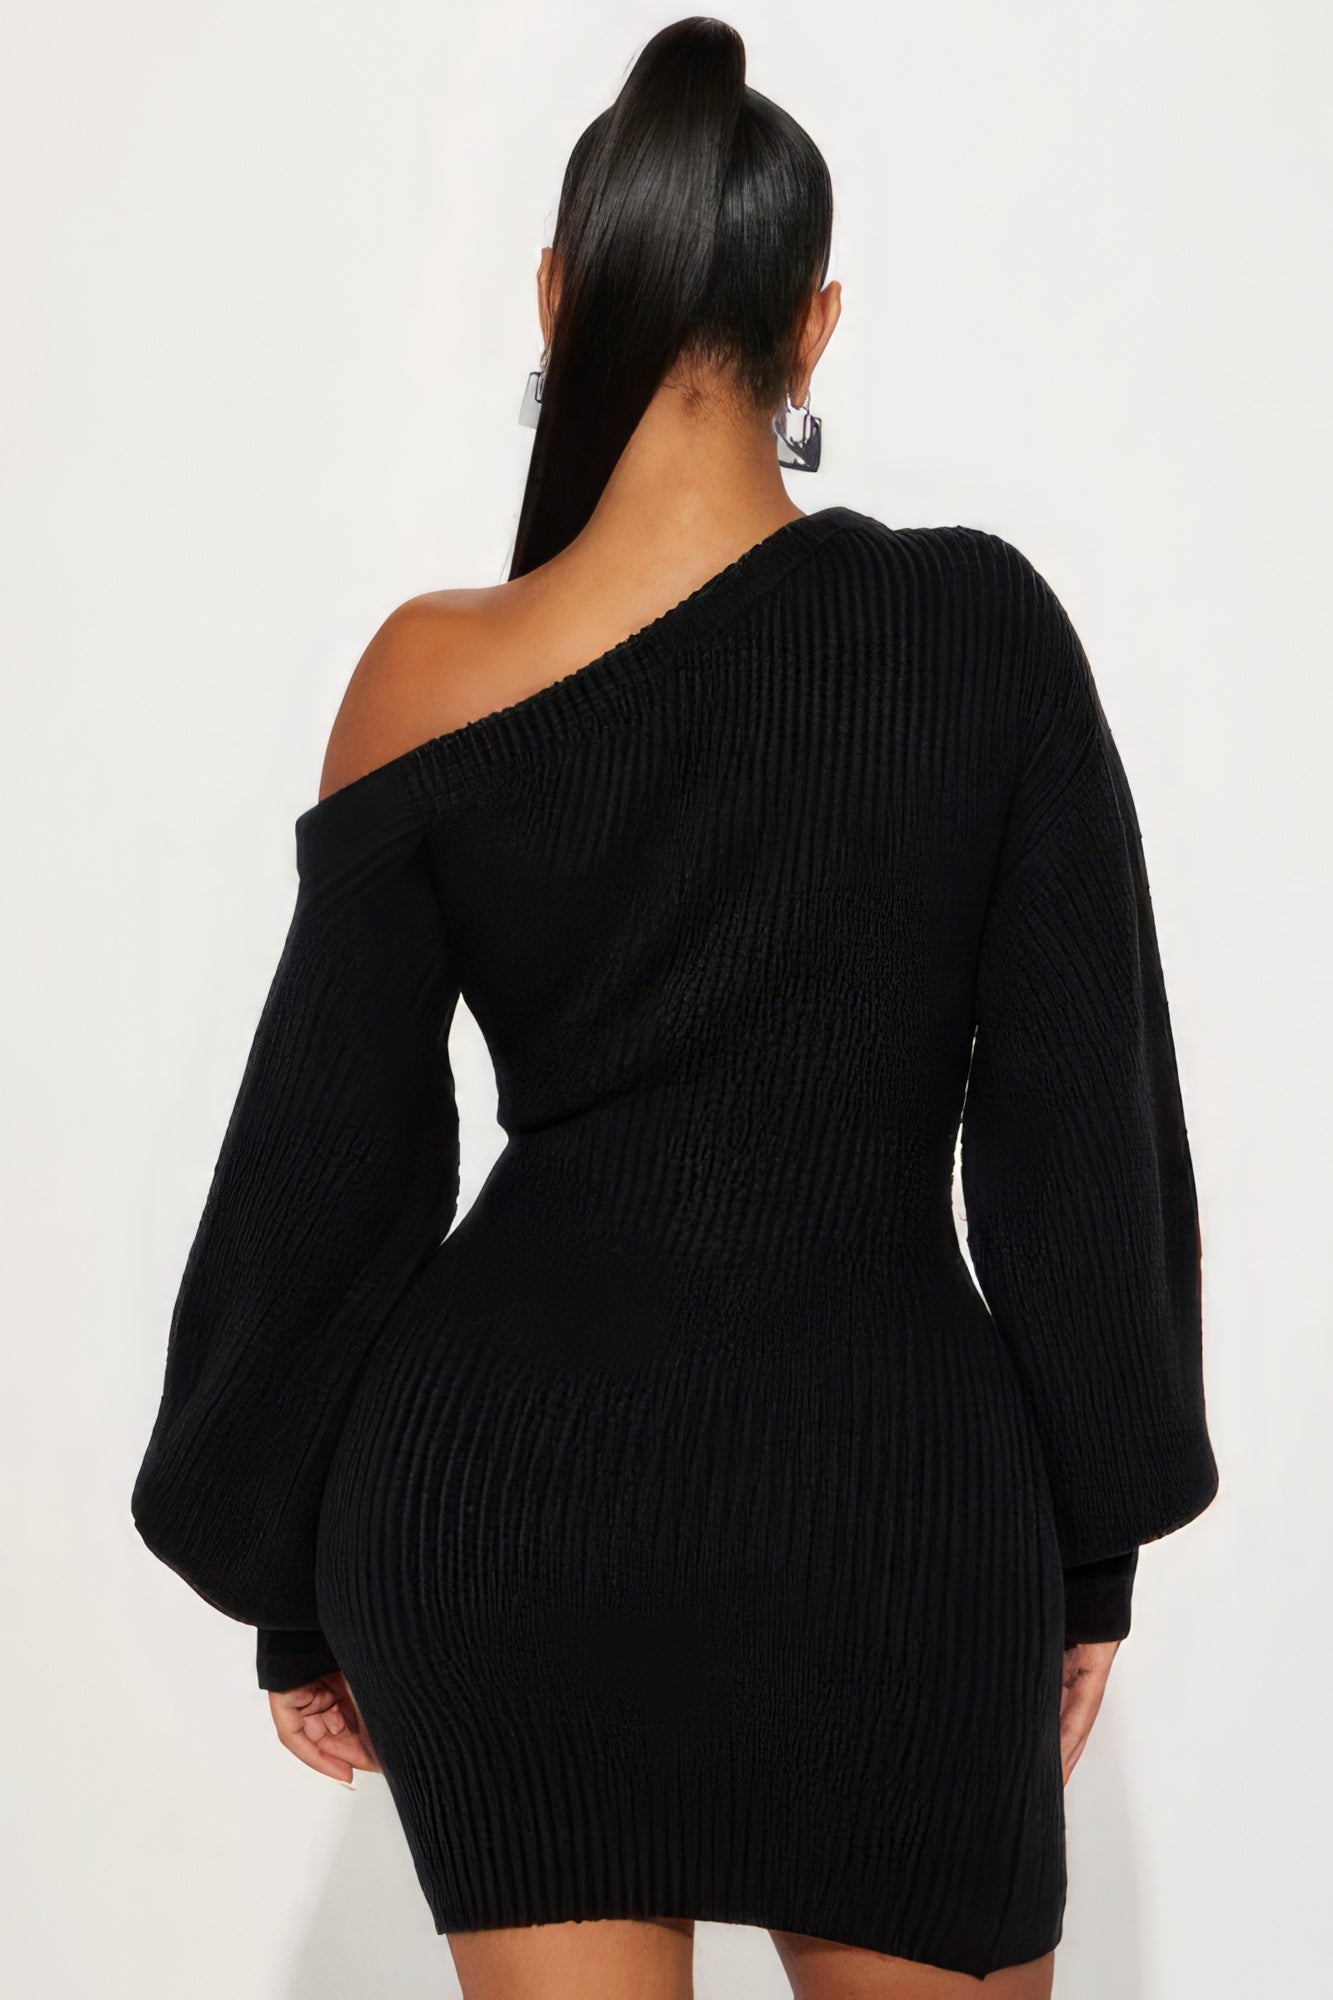 Sweater Knit Mini Dress Sunny EvE Fashion